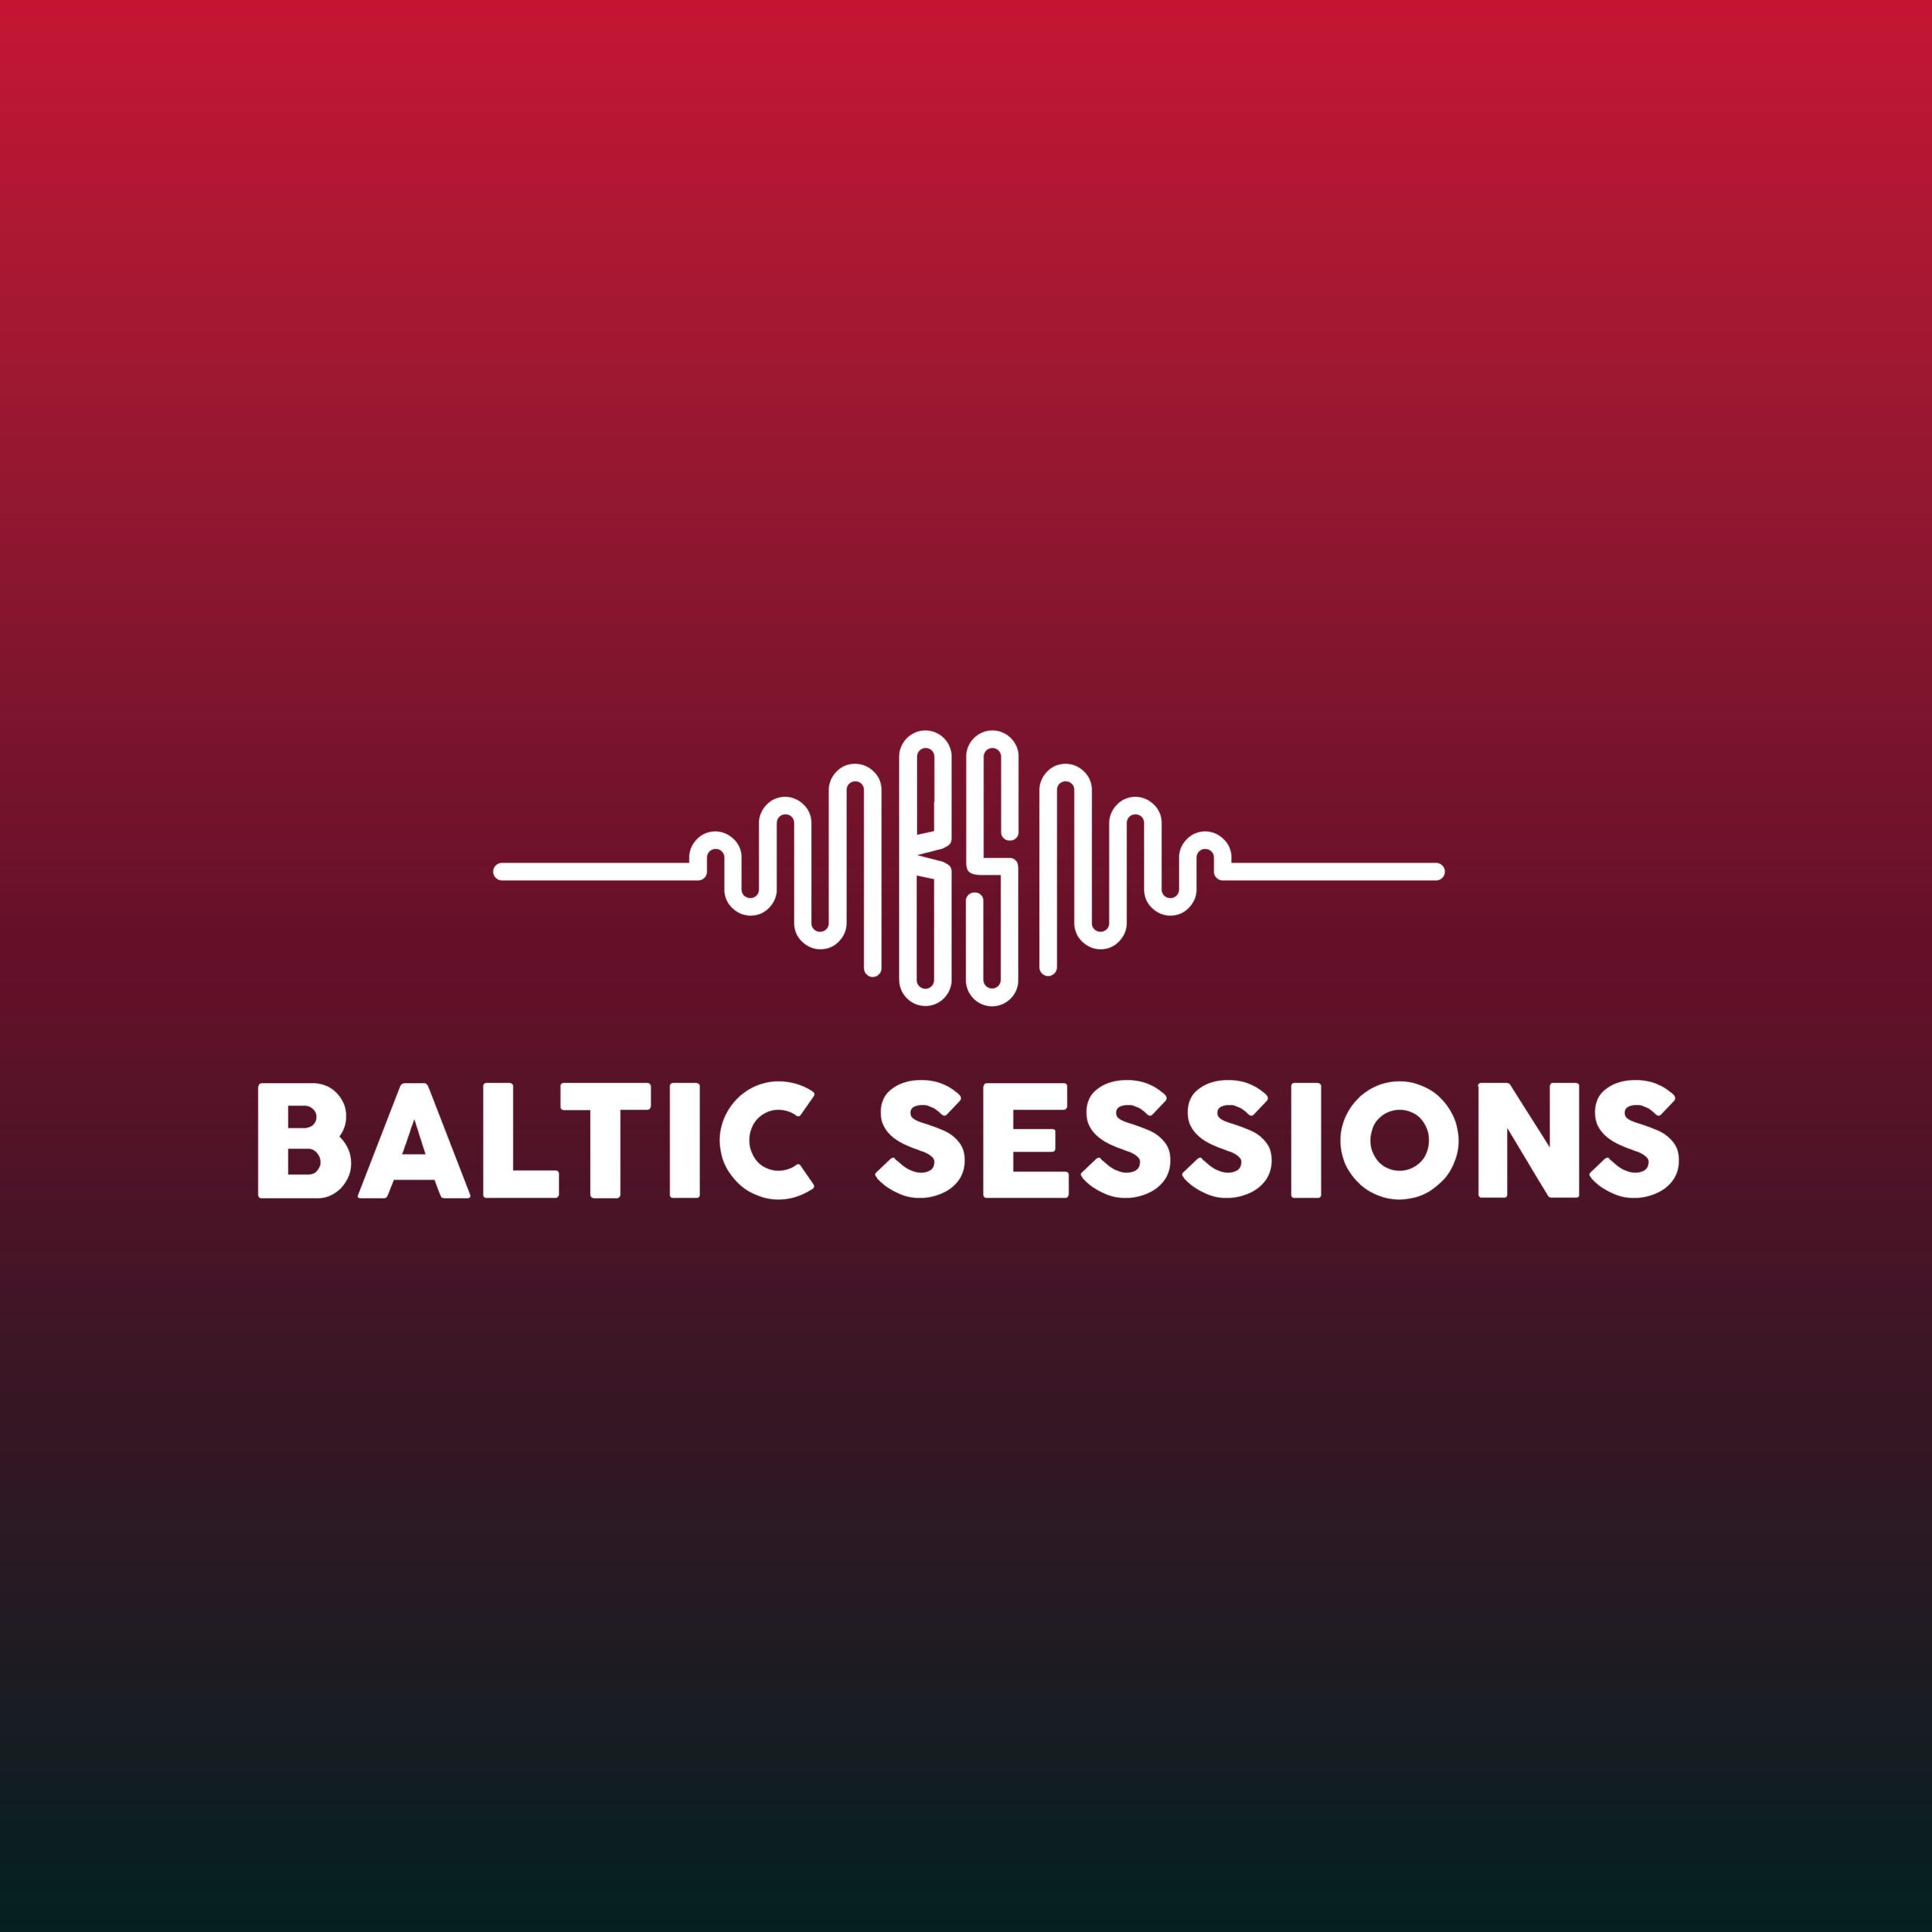 baltic sessions photo alarmstreet